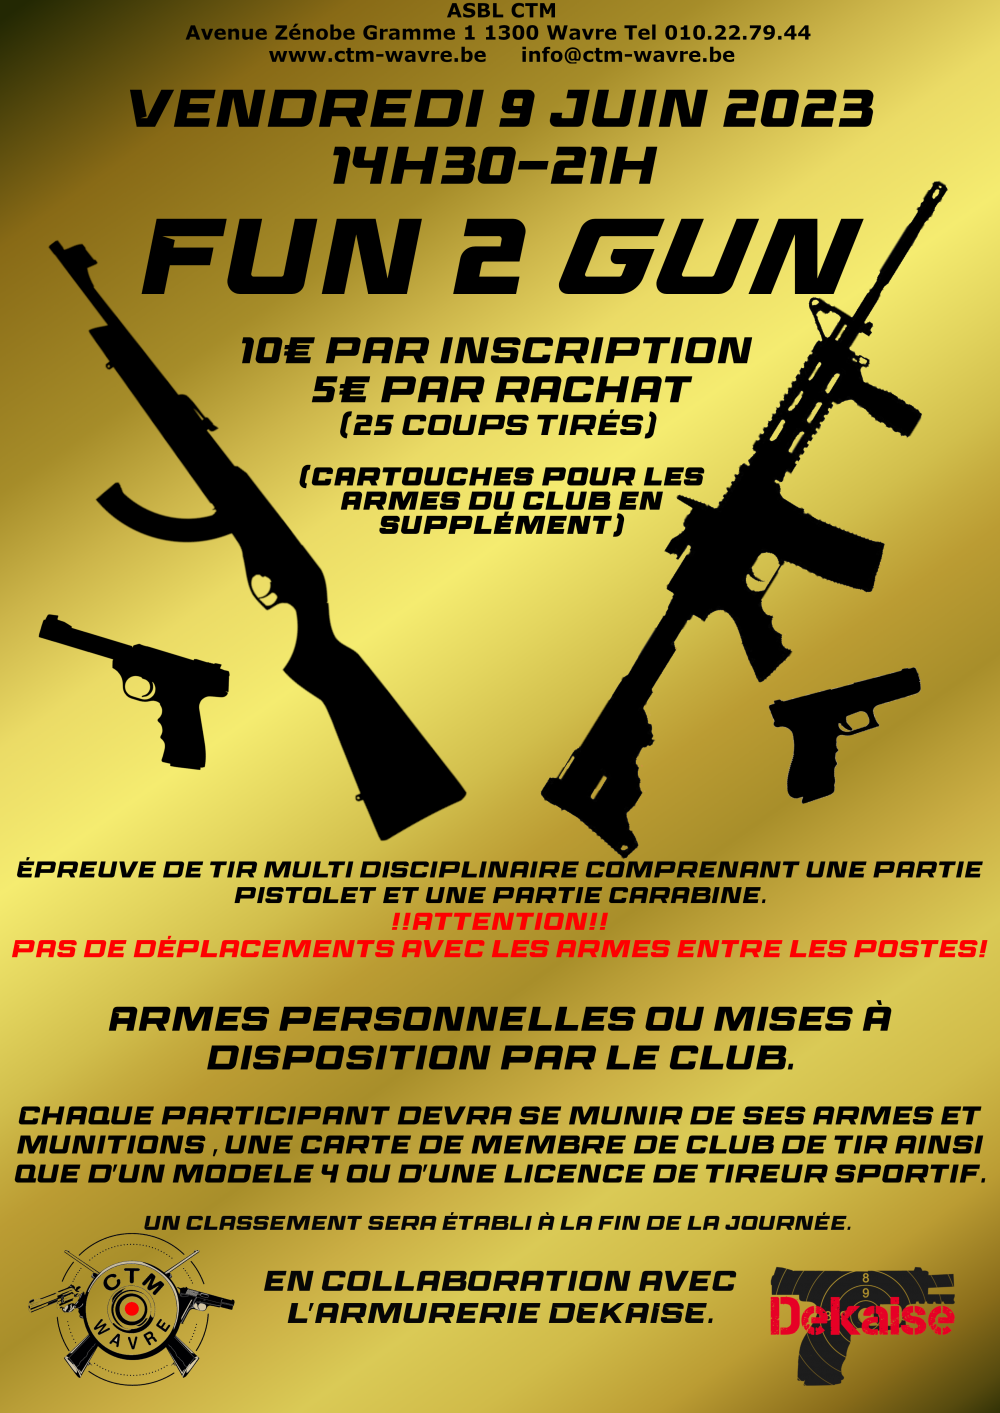 Fun 2 gun